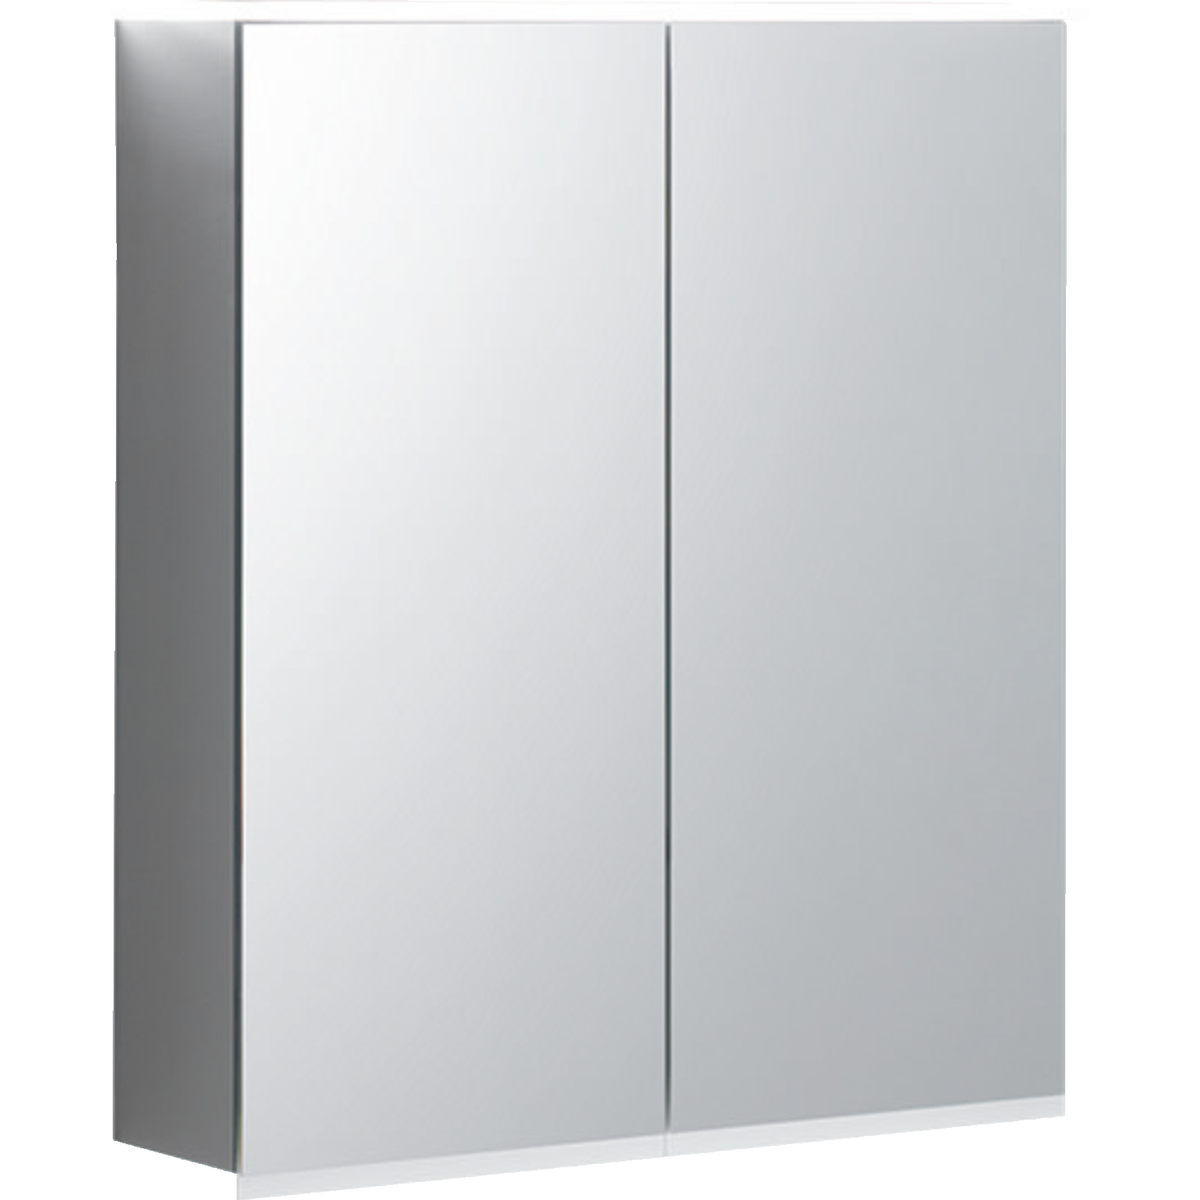 Option Plus mirror cabinet with lighting 2 doors - 600mm